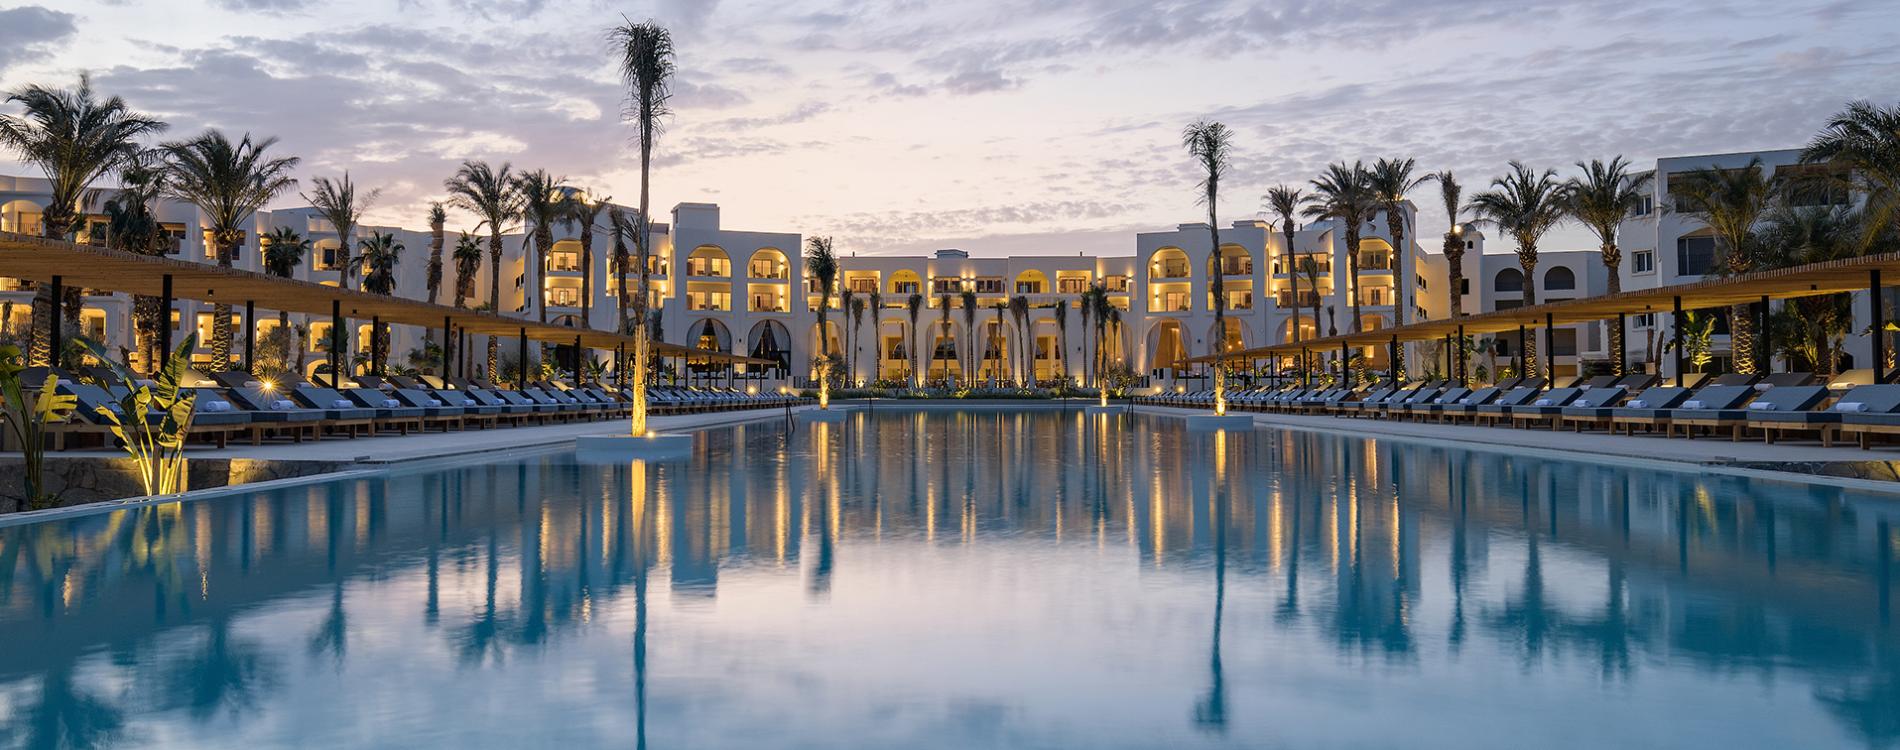 Serry Beach Resort, in Hurghada, Egypt